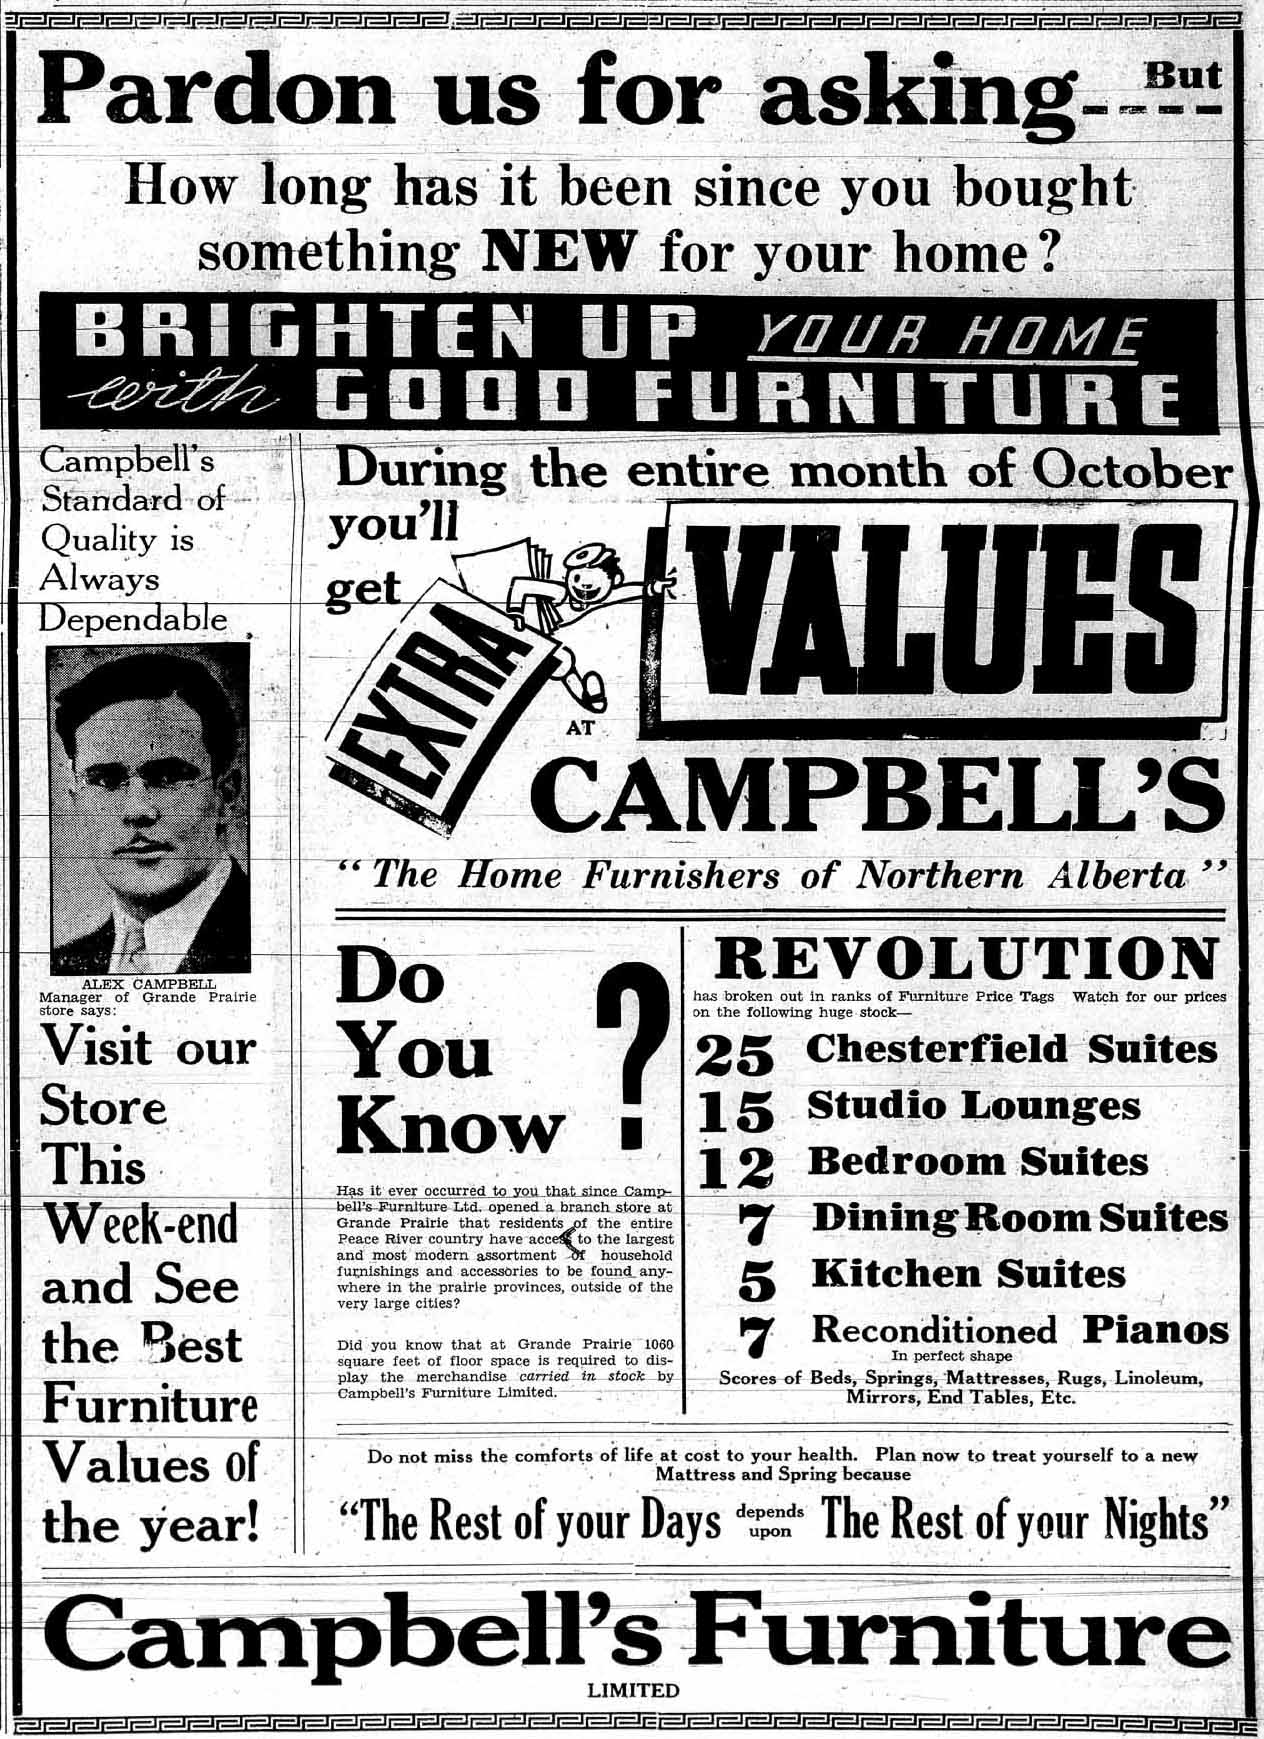 October 1, 1937 ad